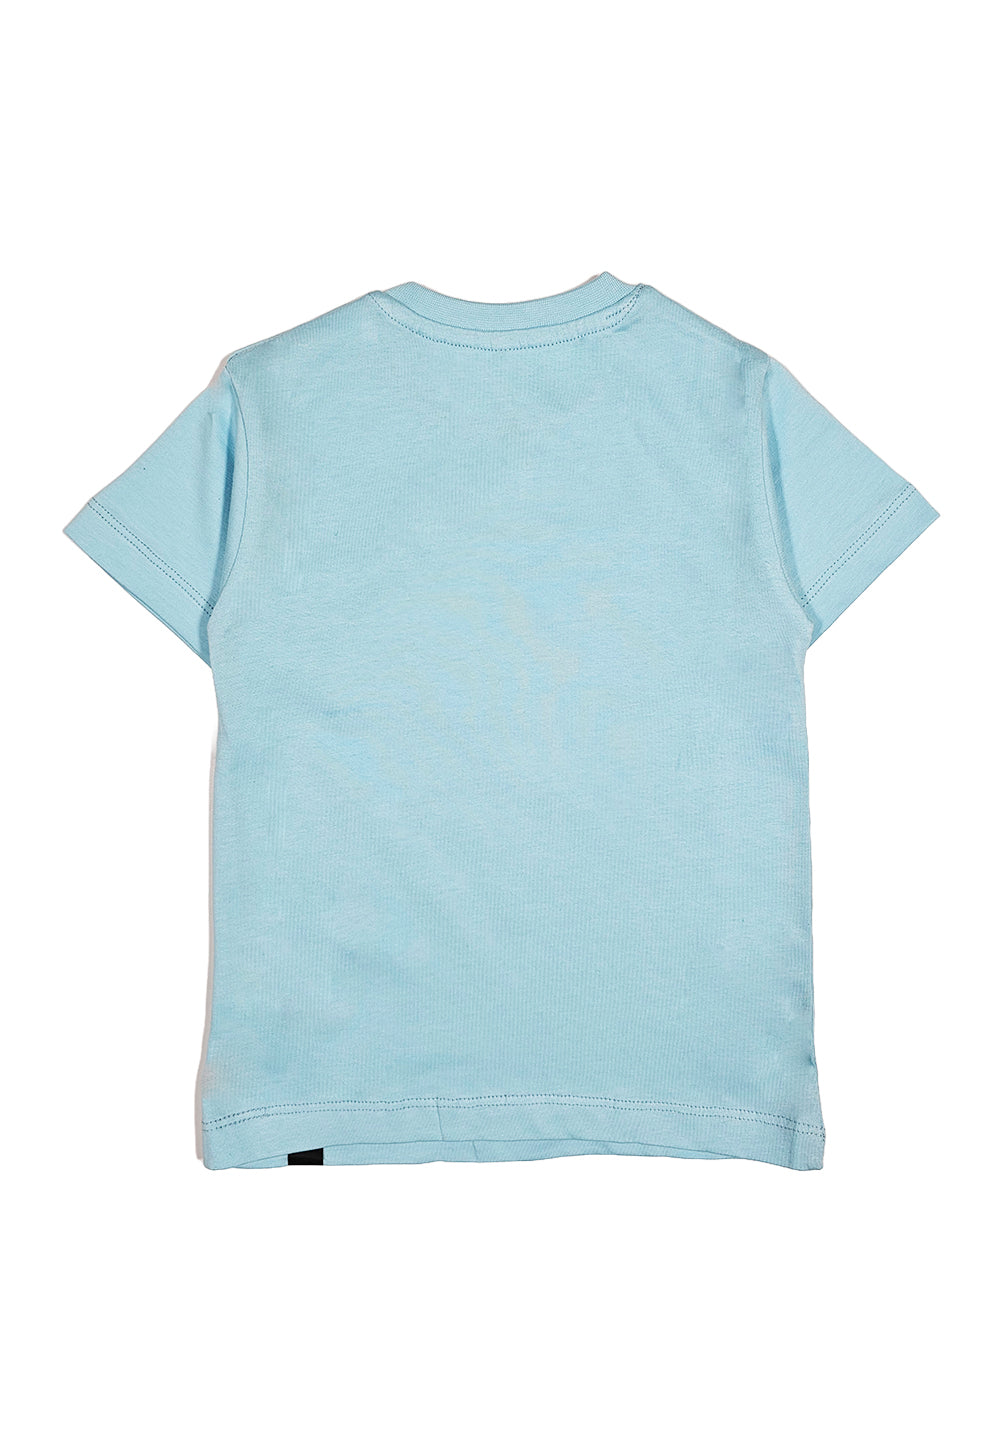 T-shirt celeste per neonato - Primamoda kids